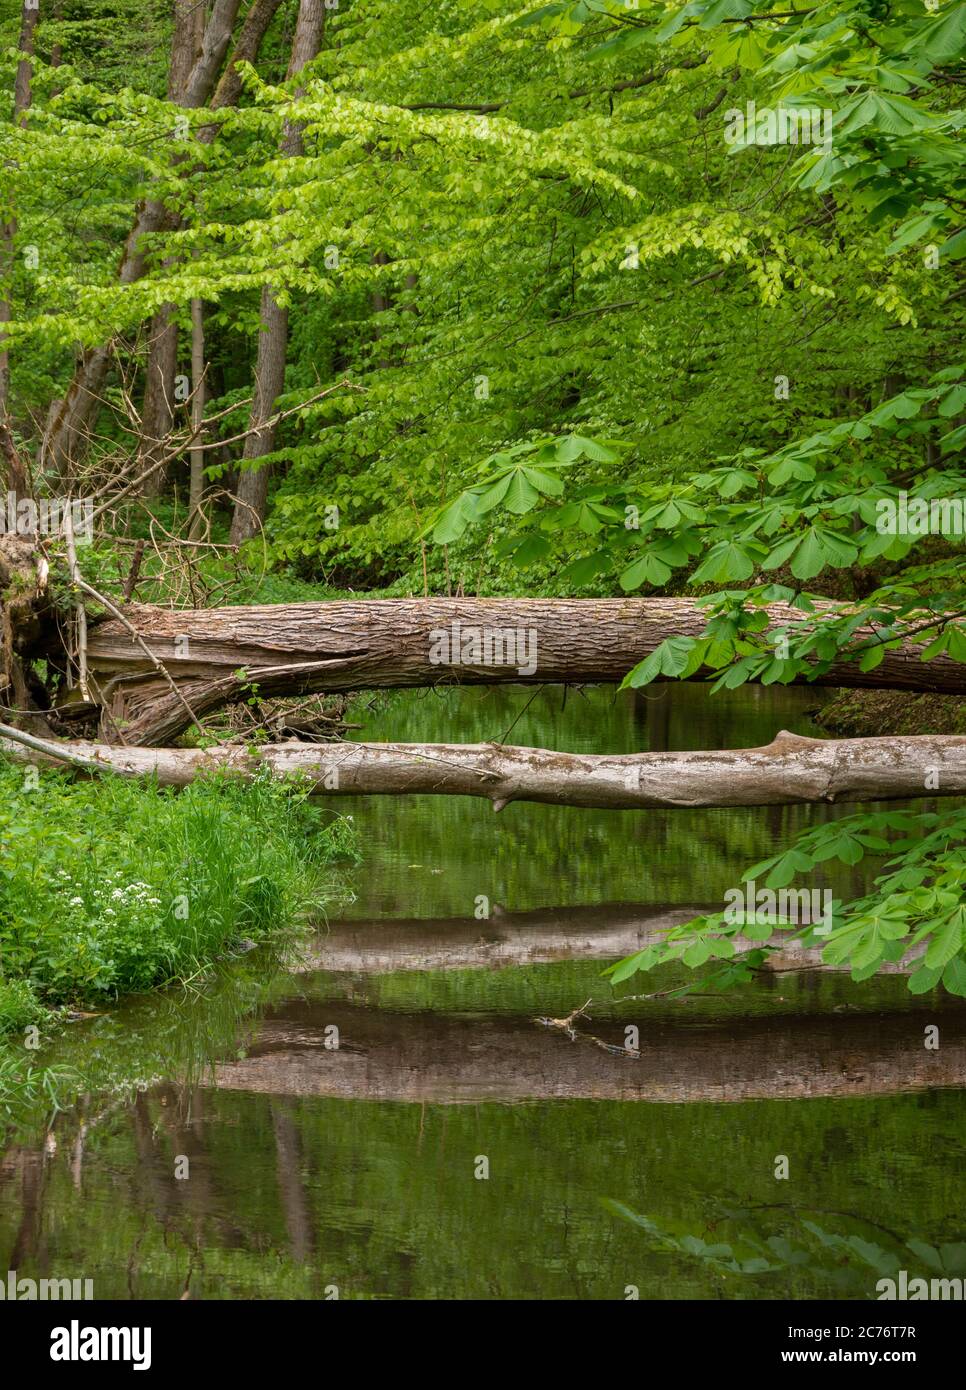 Tree trunks fallen over Kobylanka stream making a natural bridge. The Kobylanka flows into the Rudawa River. Stock Photo